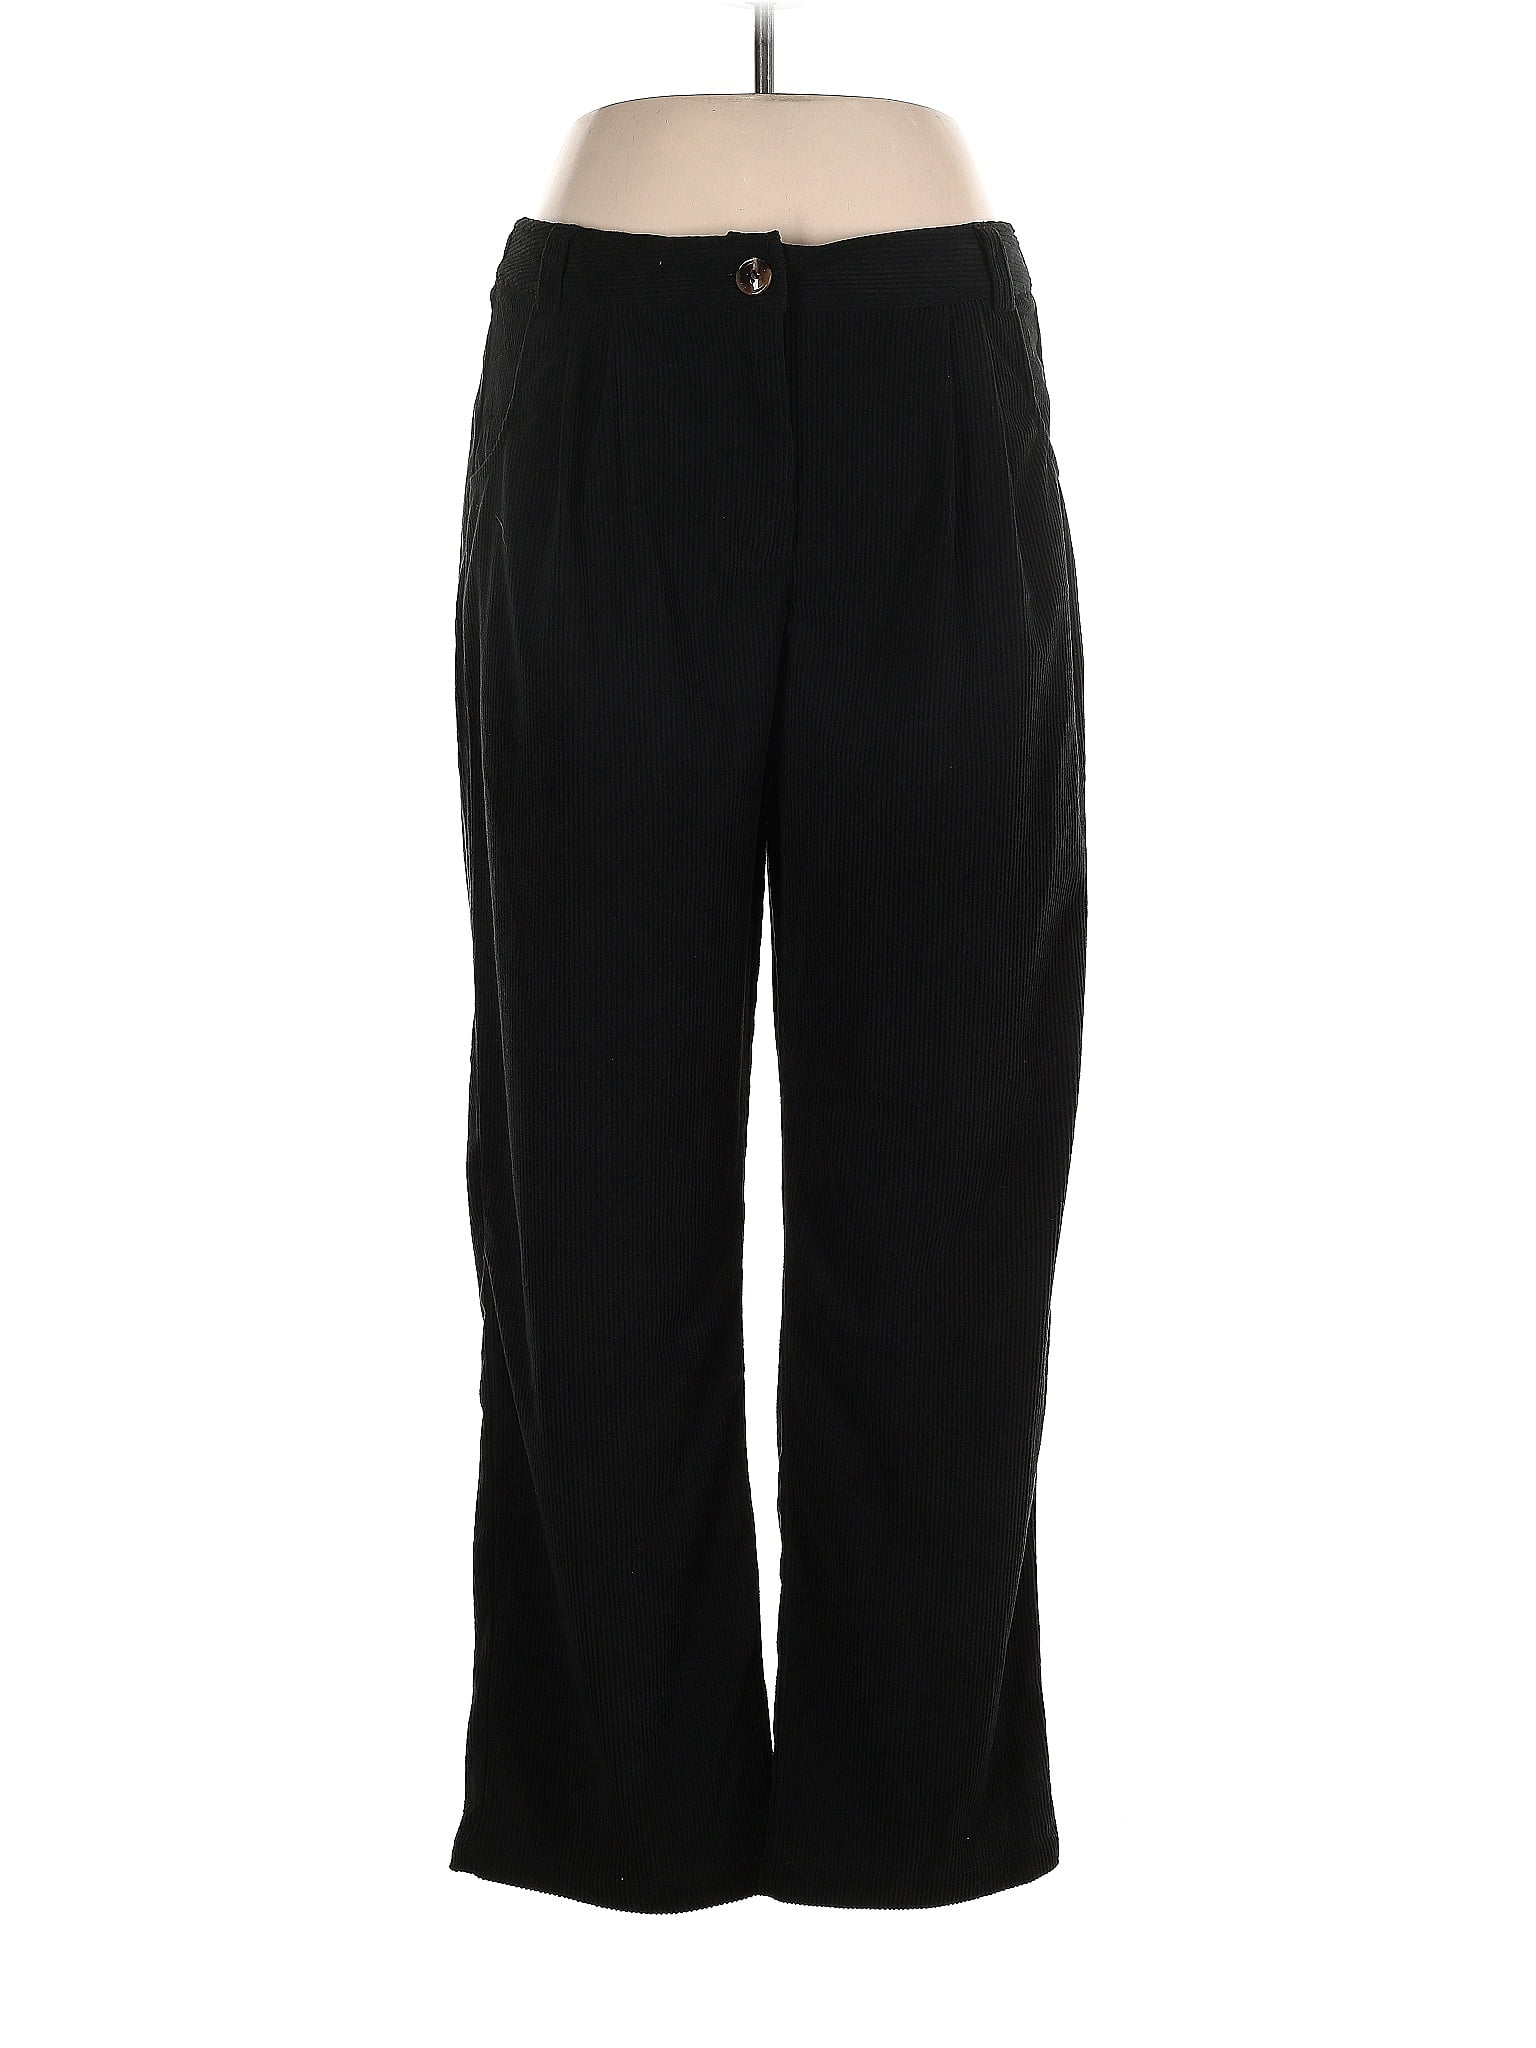 Halara 100% Polyester Solid Black Casual Pants Size L (Tall) - 68